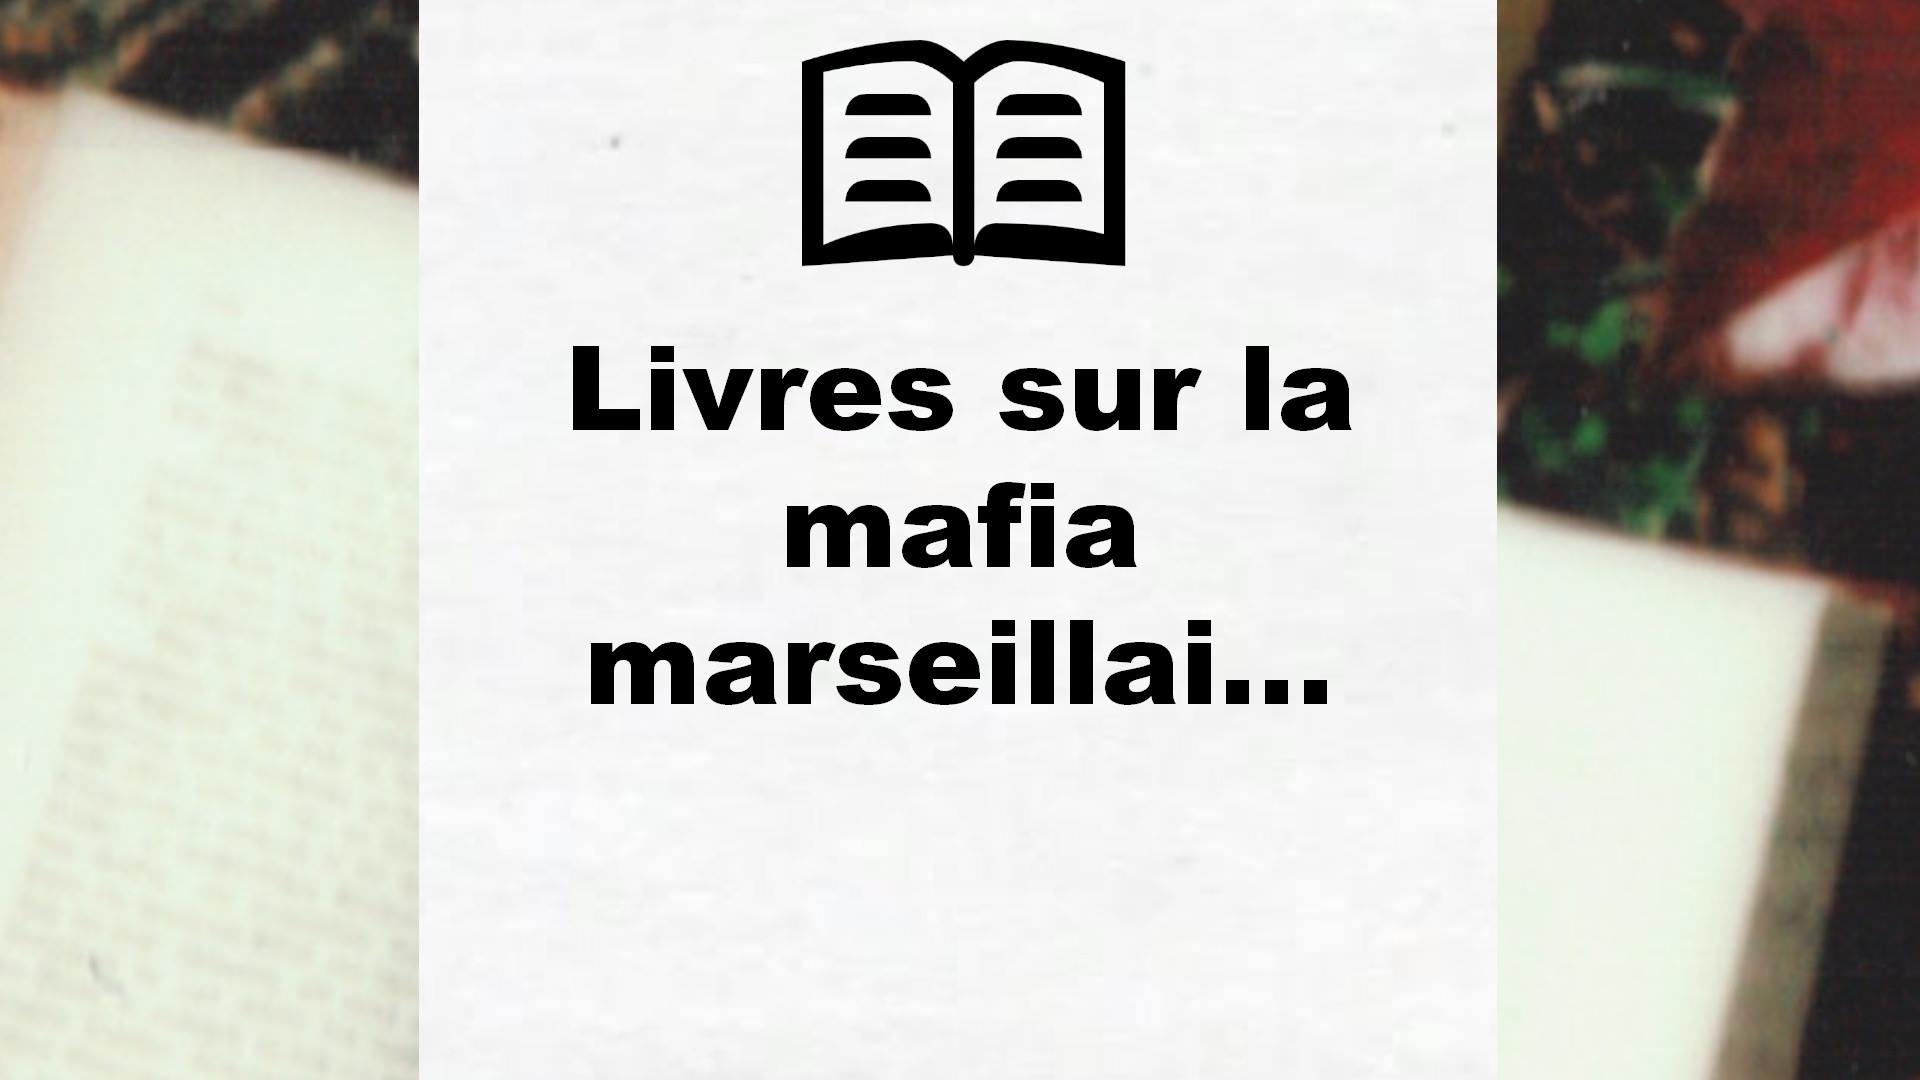 Livres sur la mafia marseillaise